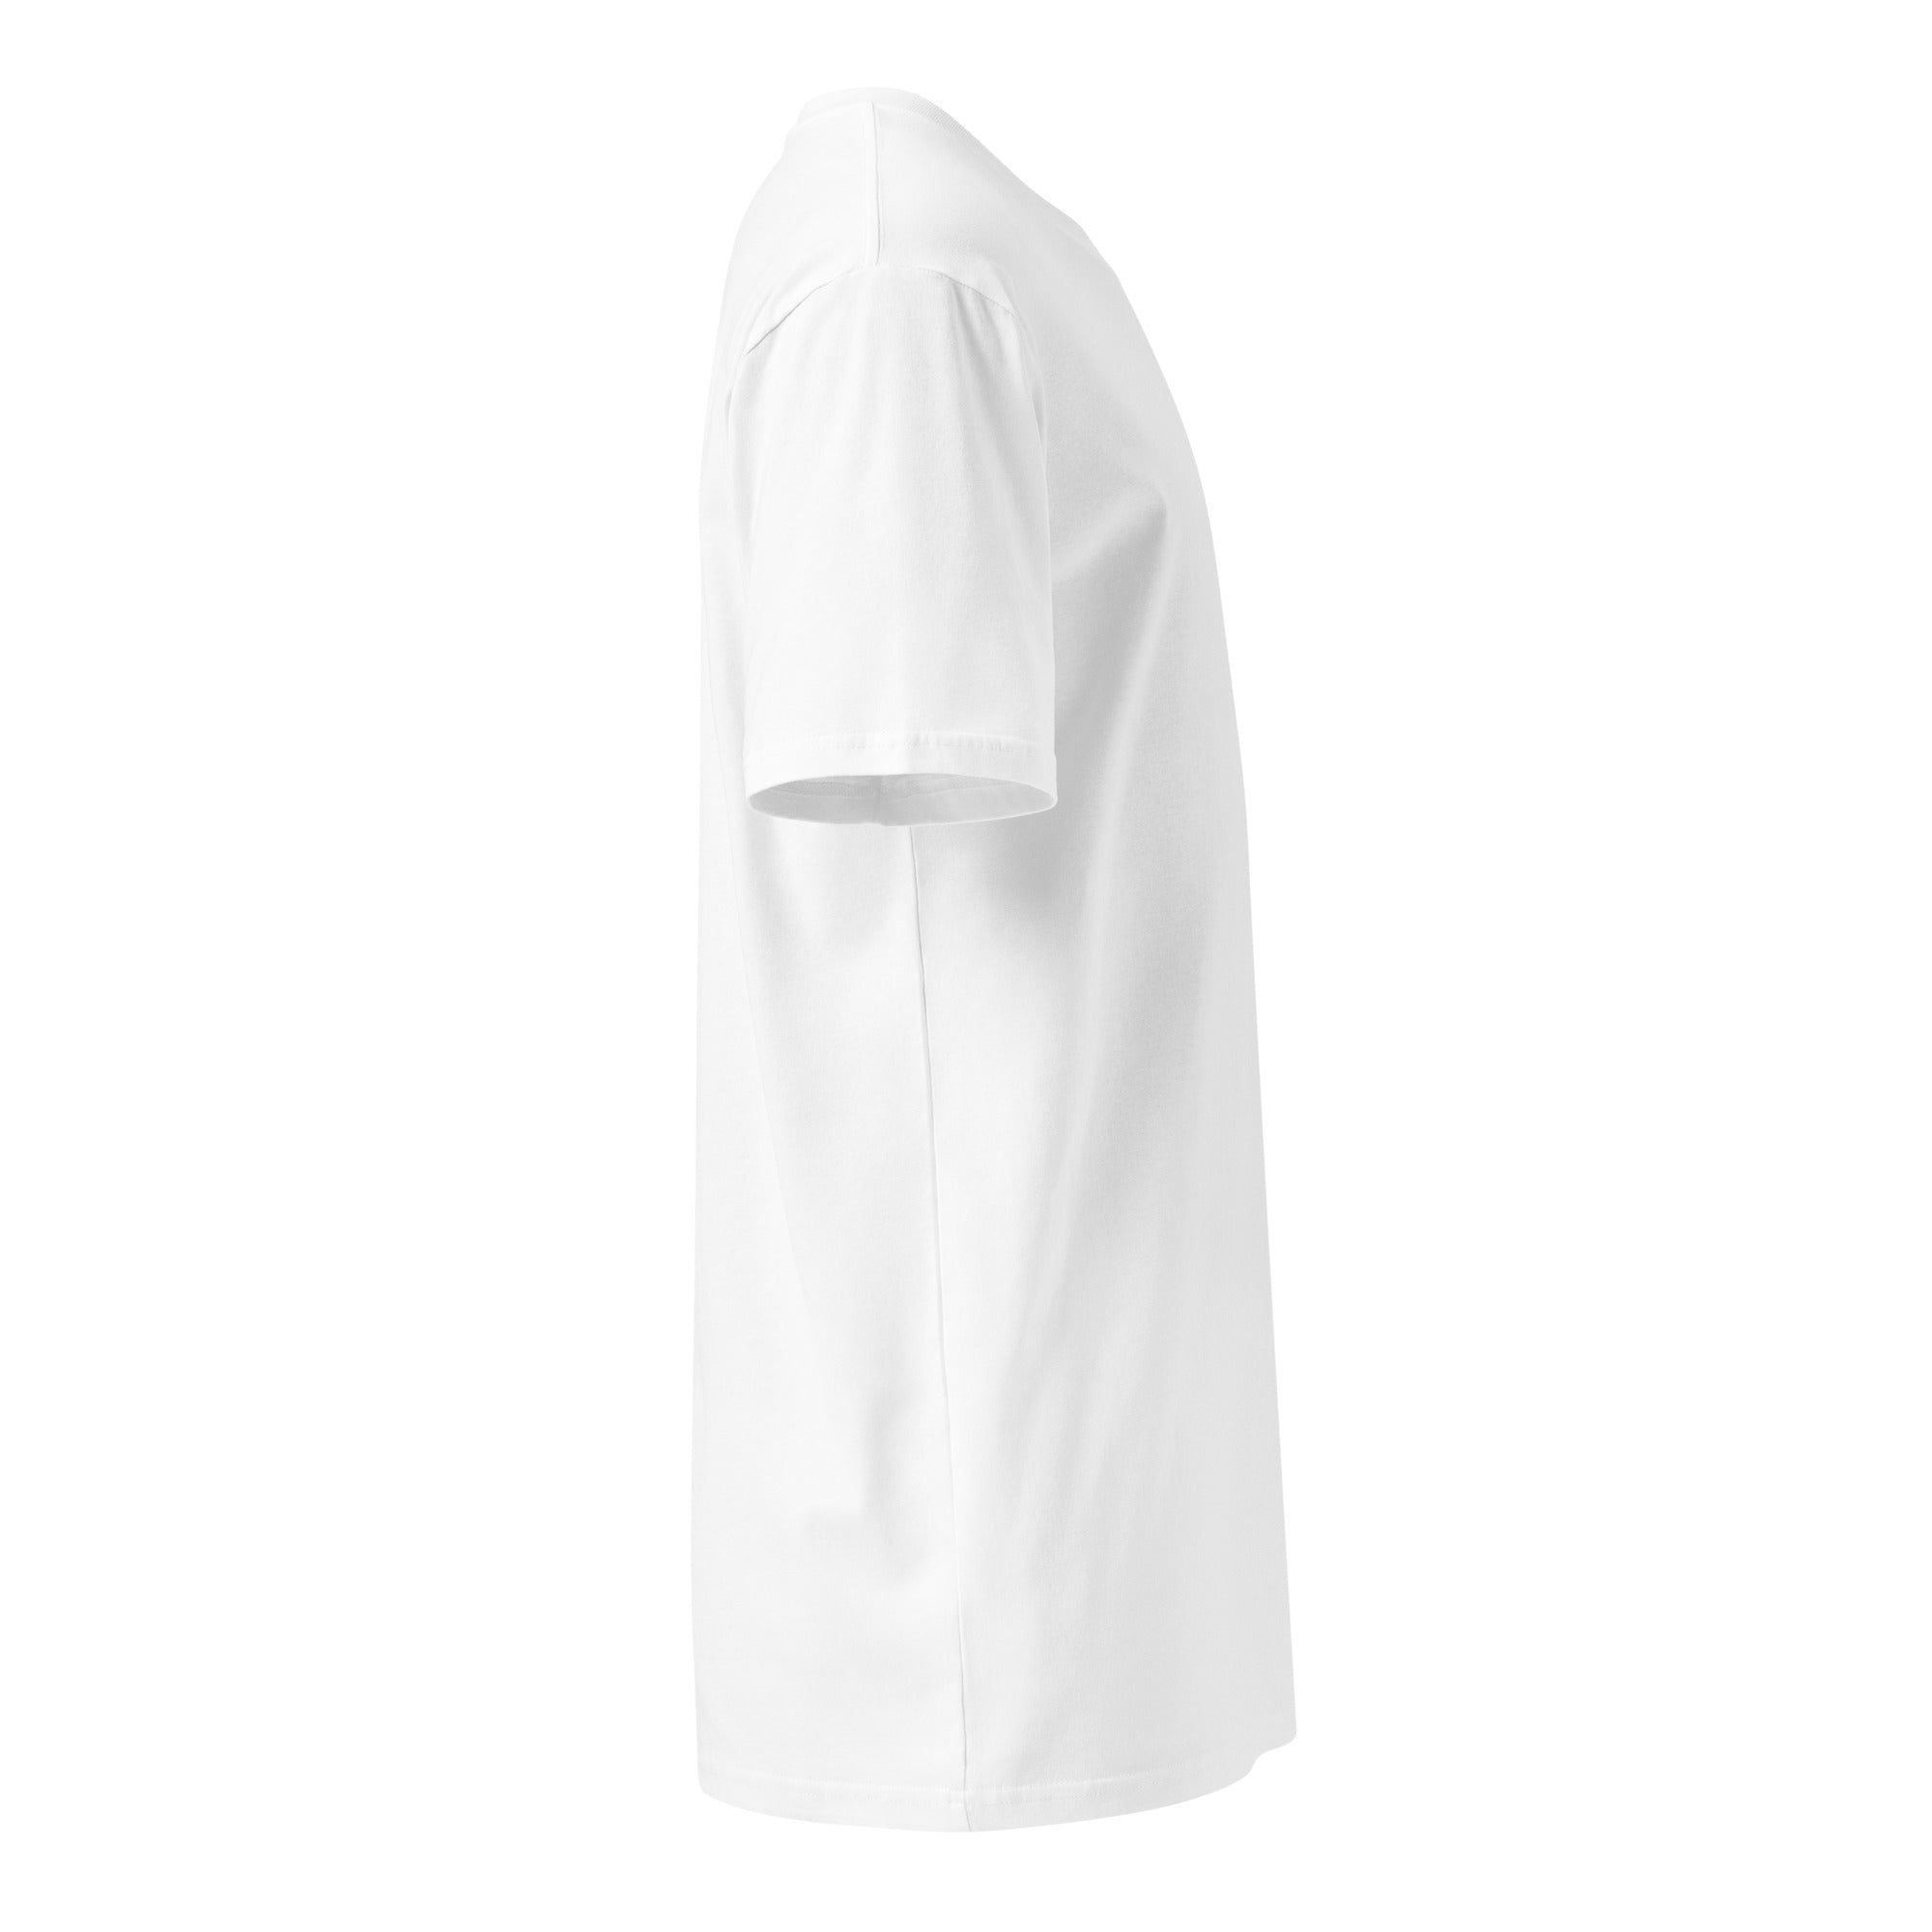 Drakonos - Men's White Premium T-shirt - Men's T-Shirts - DRAGON FOXX™ - Drakonos - Men's White Premium T-shirt - 9083179_18793 - S - White - 100% combed cotton - Dragon Foxx™ - Dragon Foxx™ Drakonos - Men's White Premium T-shirt - Dragon Foxx™ Men's Graphic T-shirt